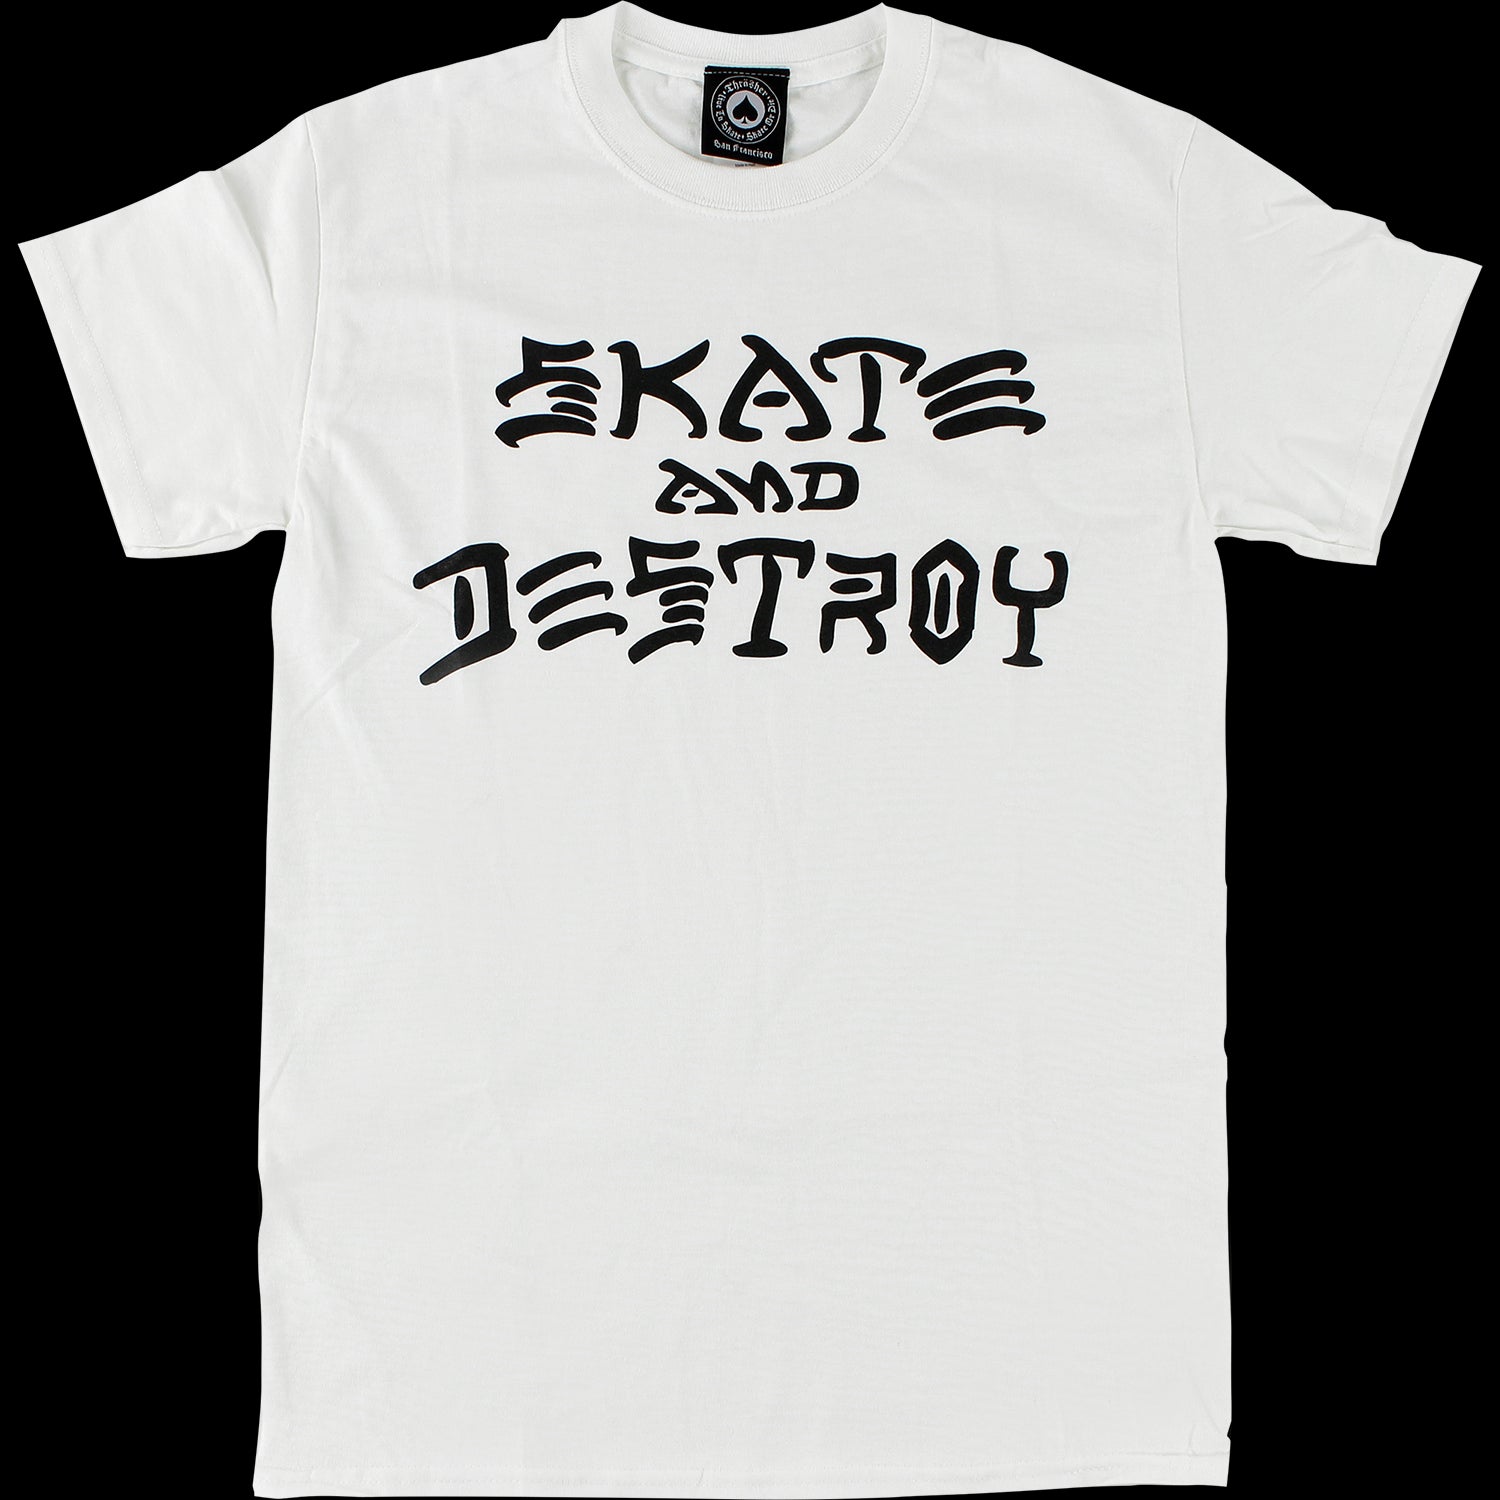 Thrasher Skate & Destroy T-shirt Black/White